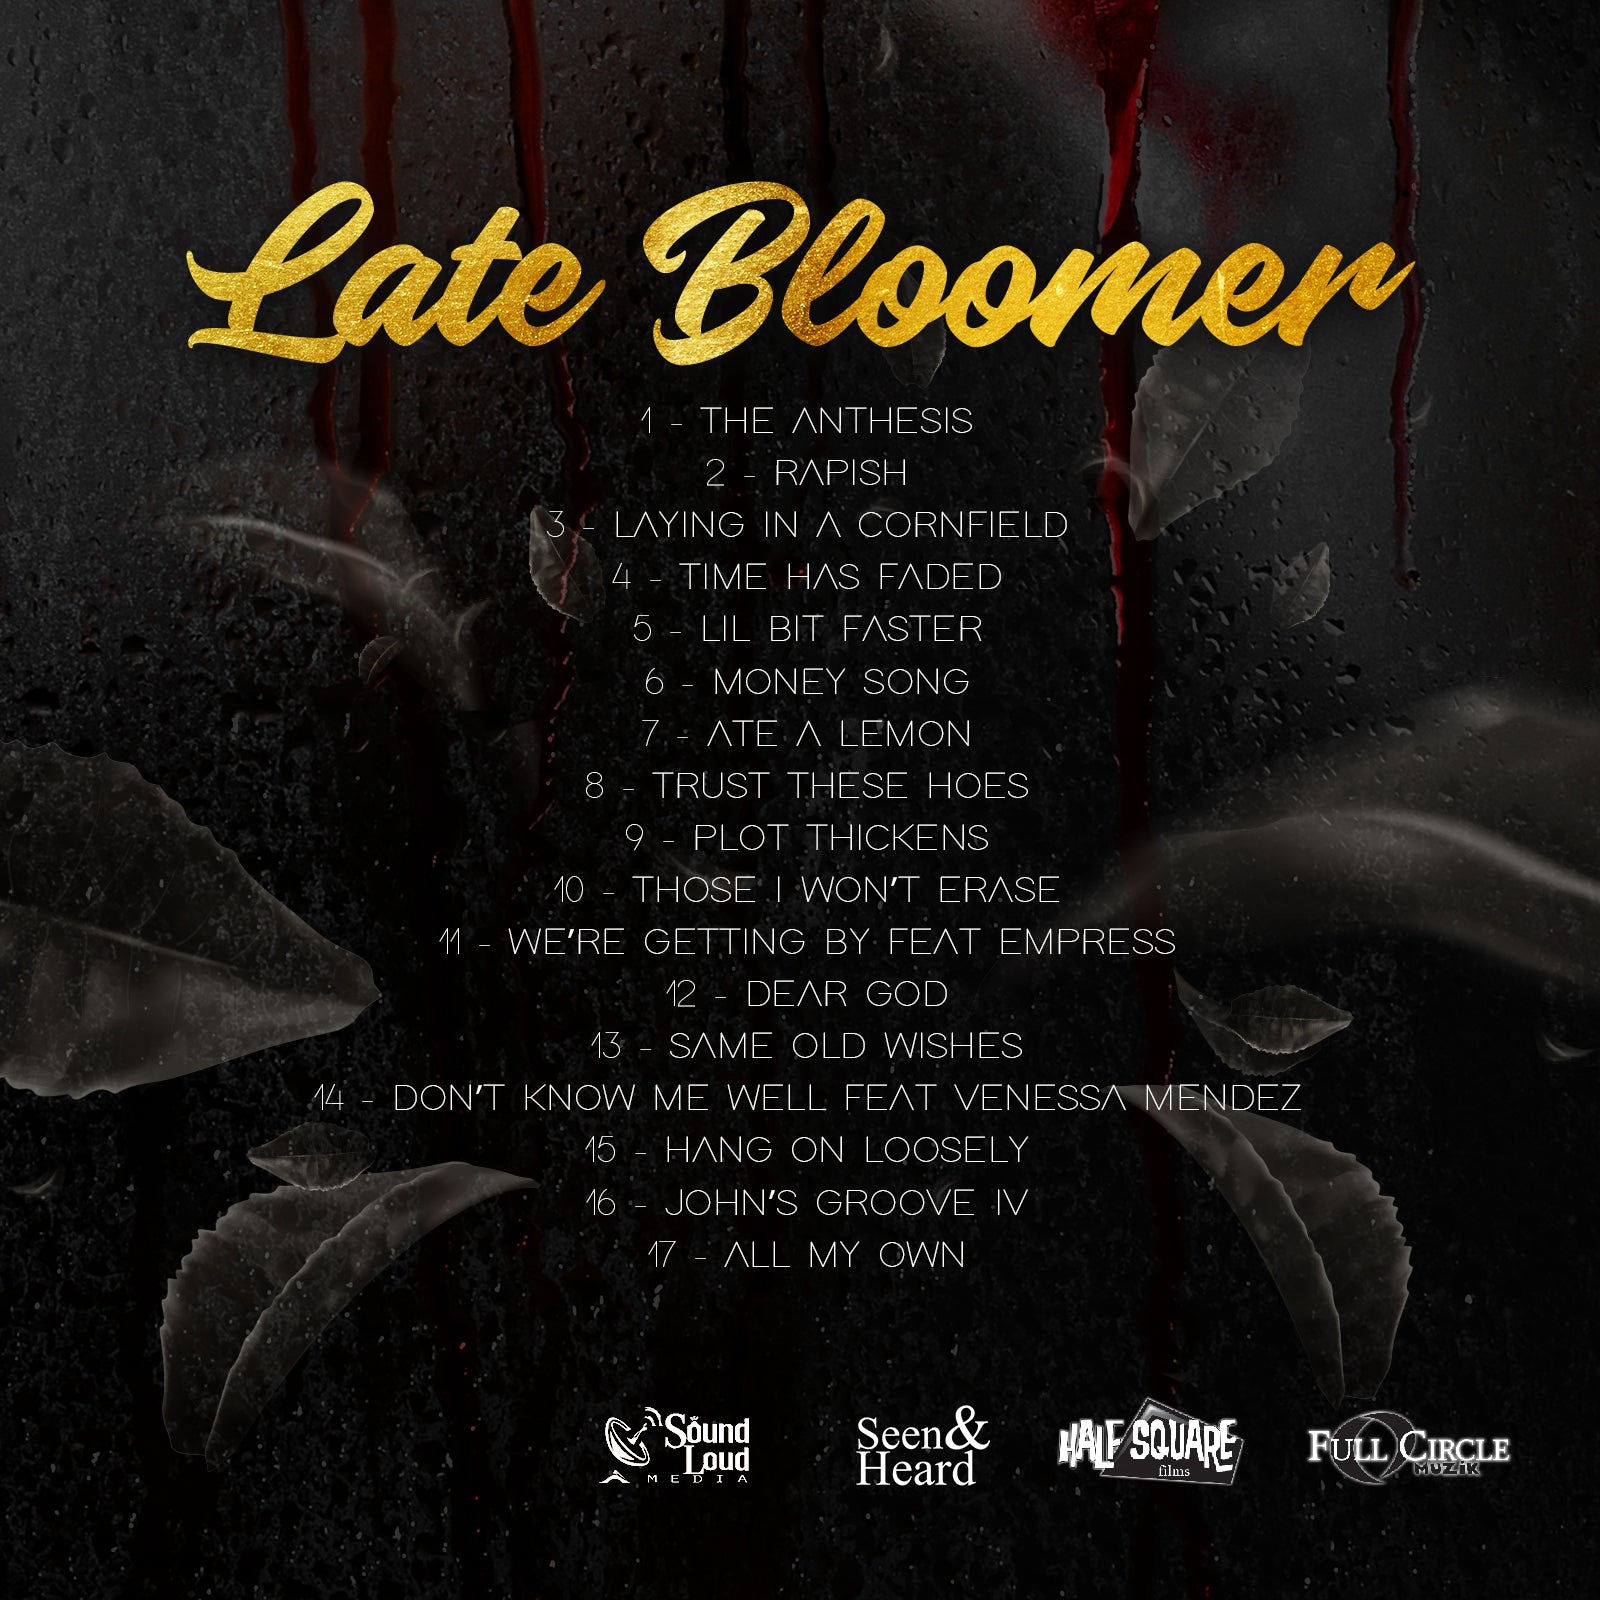 Late Bloomer CD Pre-Order - John Keenan Music